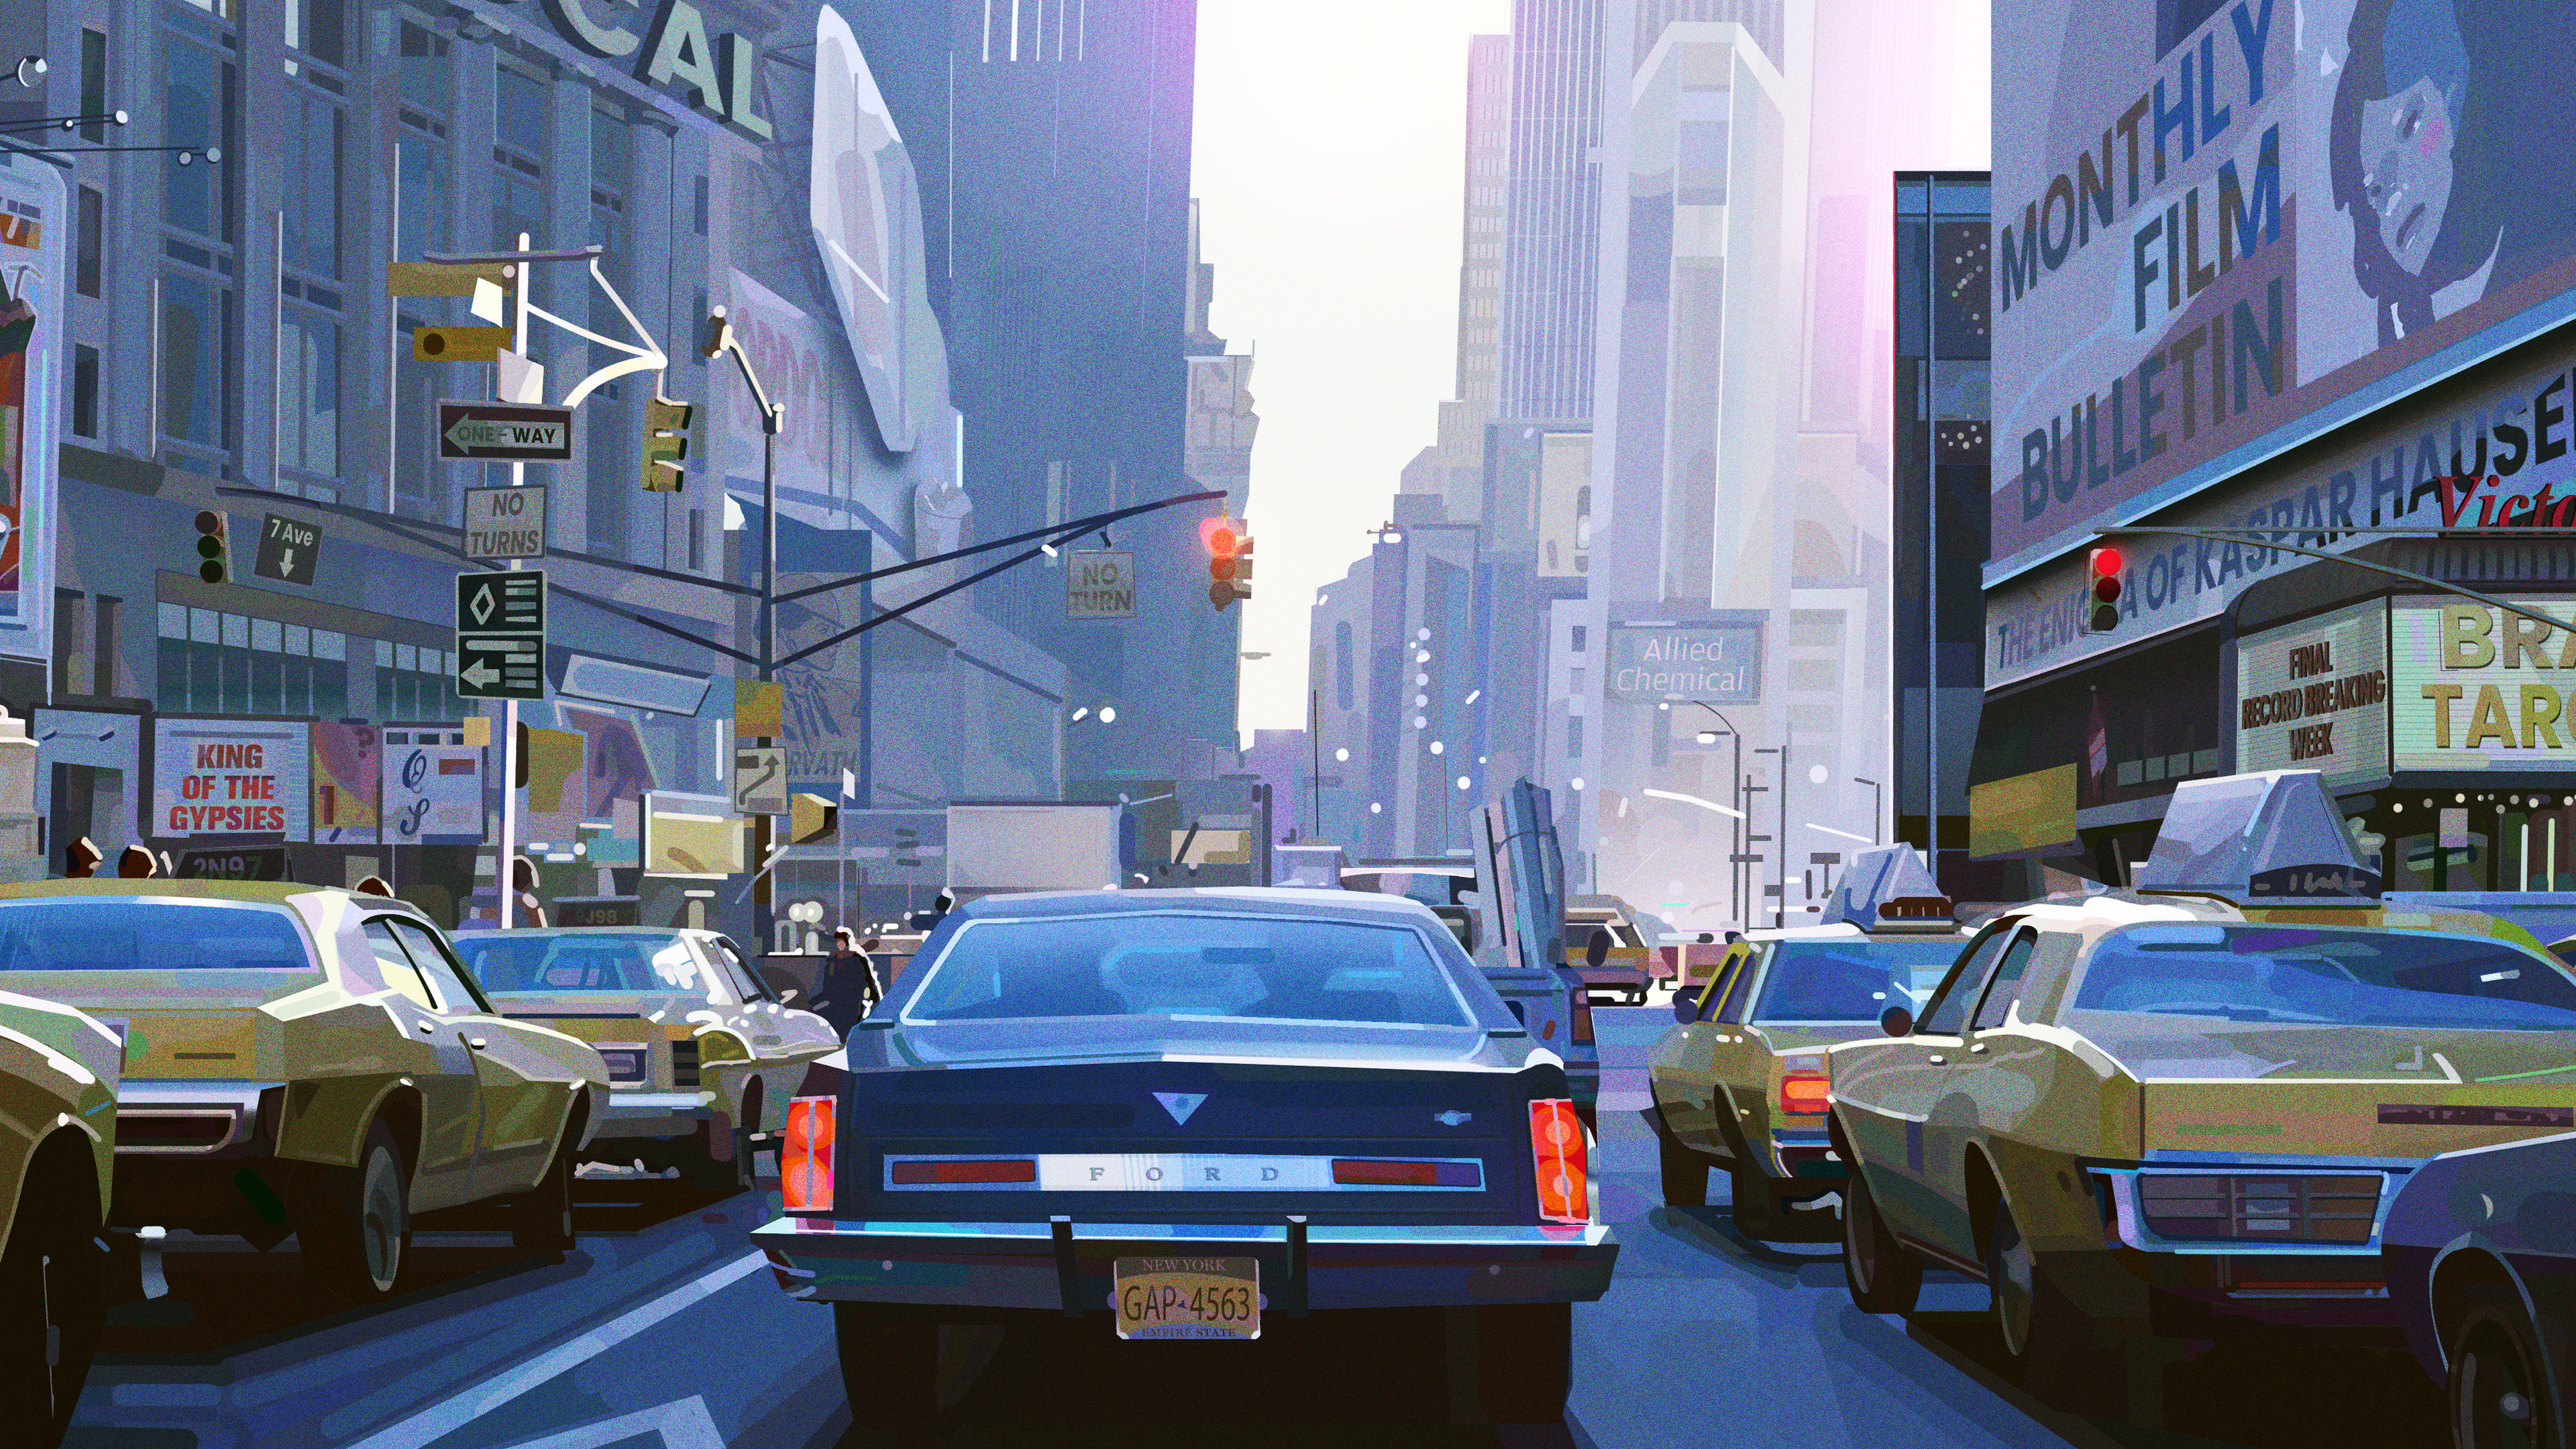 Digital Art Artwork Illustration Vehicle City Cityscape New York City Building Architecture Road Tax 3840x2160